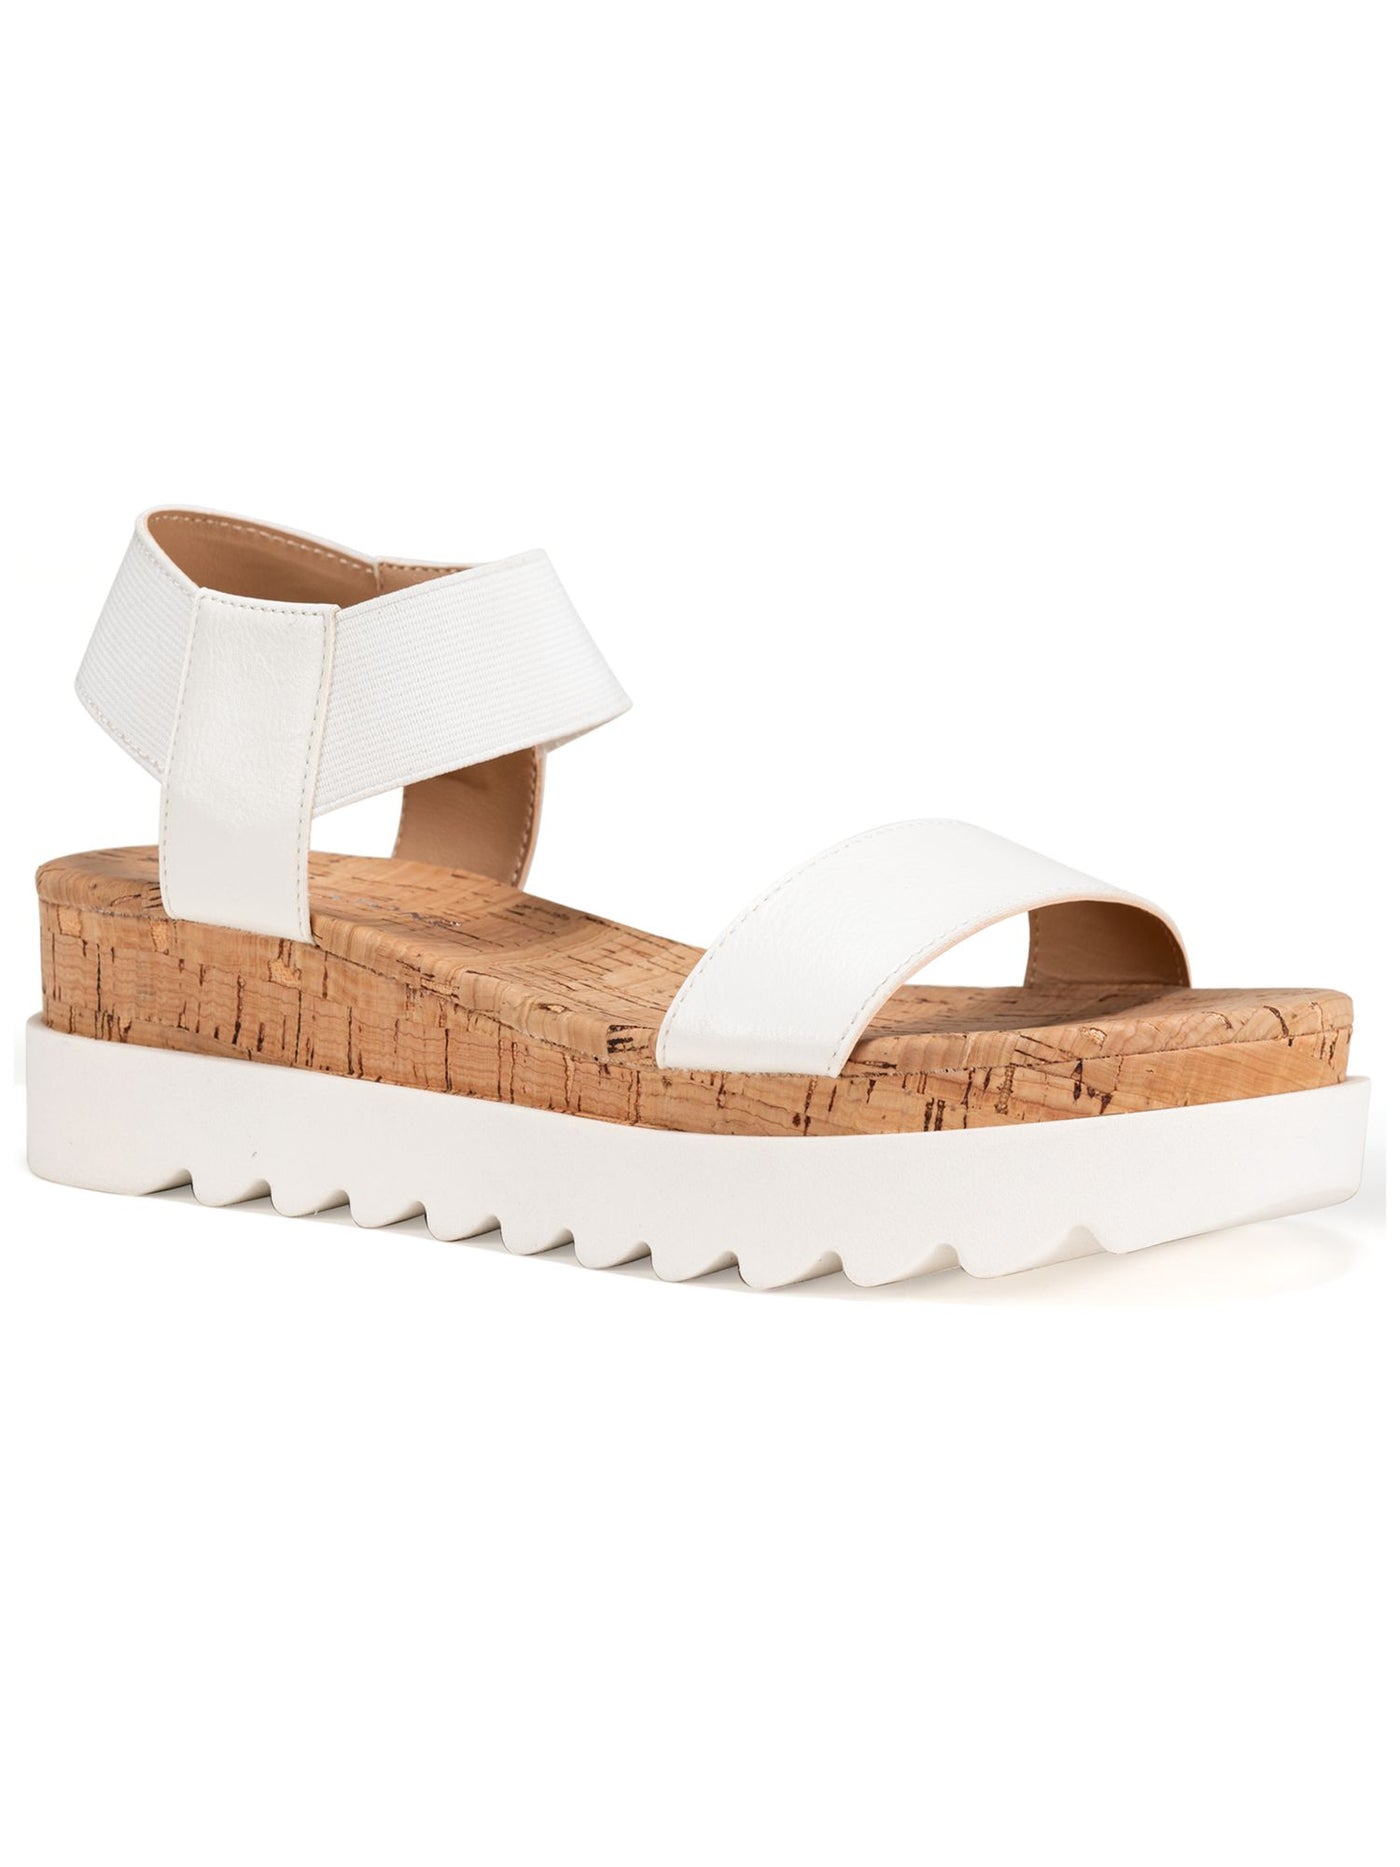 SUN STONE Womens White 1" Platform Cork-Like Stretch Comfort Ankle Strap Slip Resistant Melanyy Round Toe Wedge Slip On Sandals Shoes 9.5 M